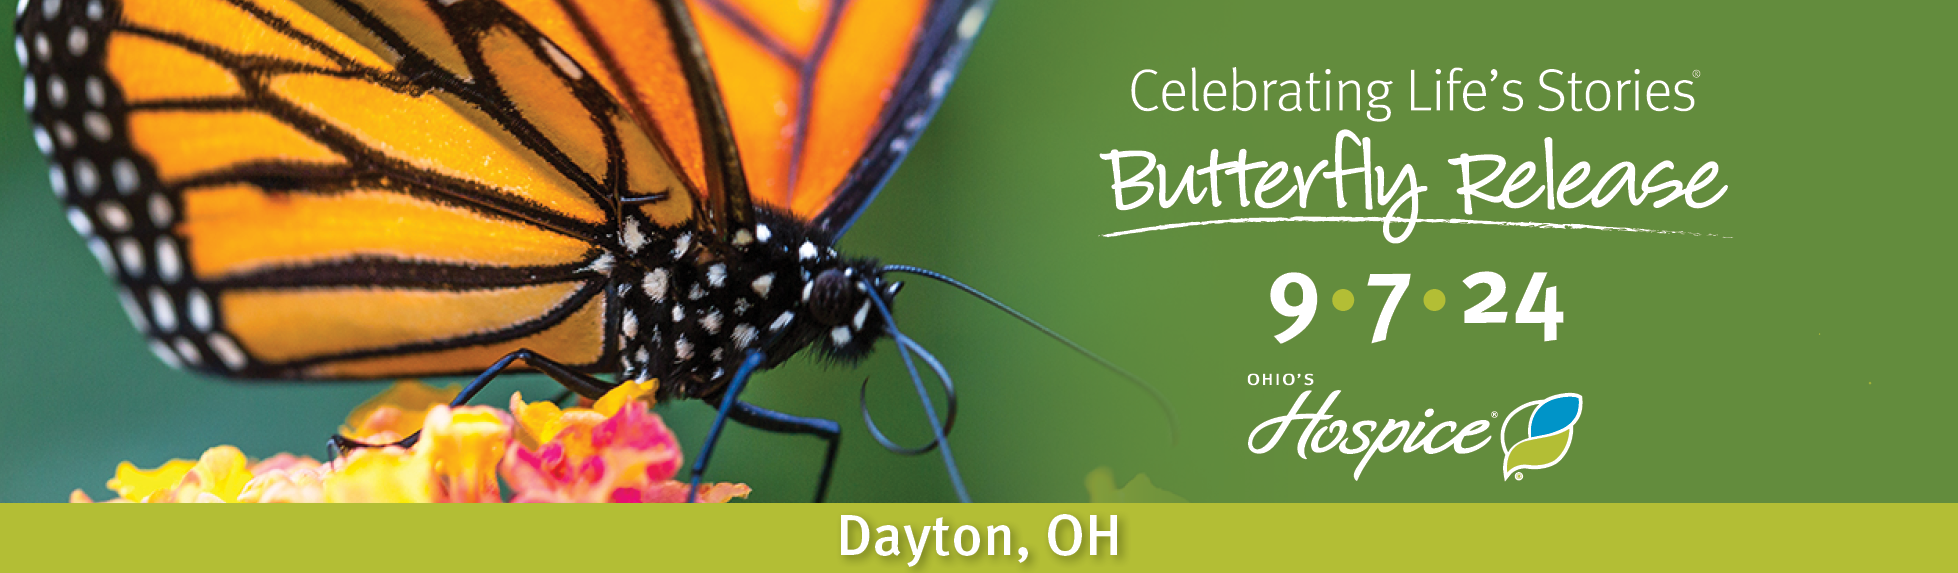 Ohio's Hospice of Dayton Celebrating Life's Stories 202Butterfly Release 9.7.24 Dayton, OH